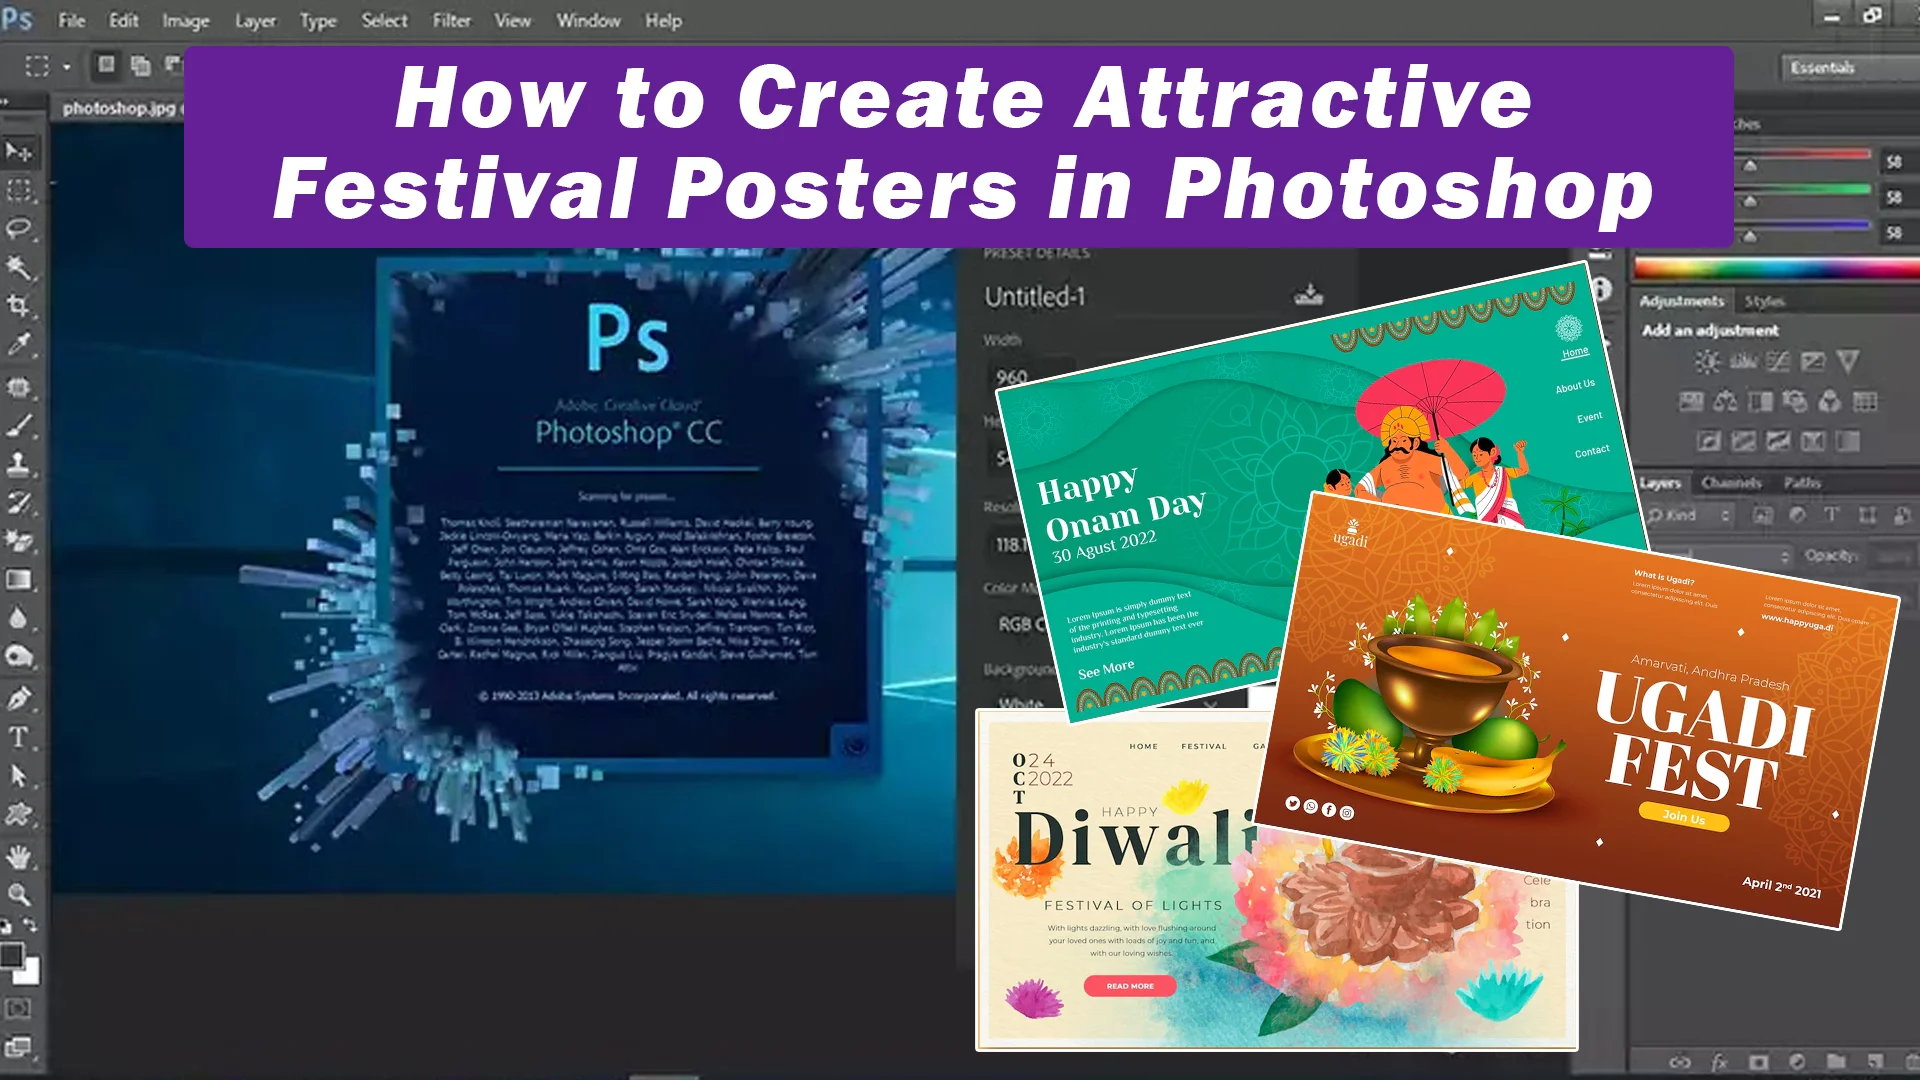 Beautiful Festival Posters Are Created by DigitalPosh Photoshop design education